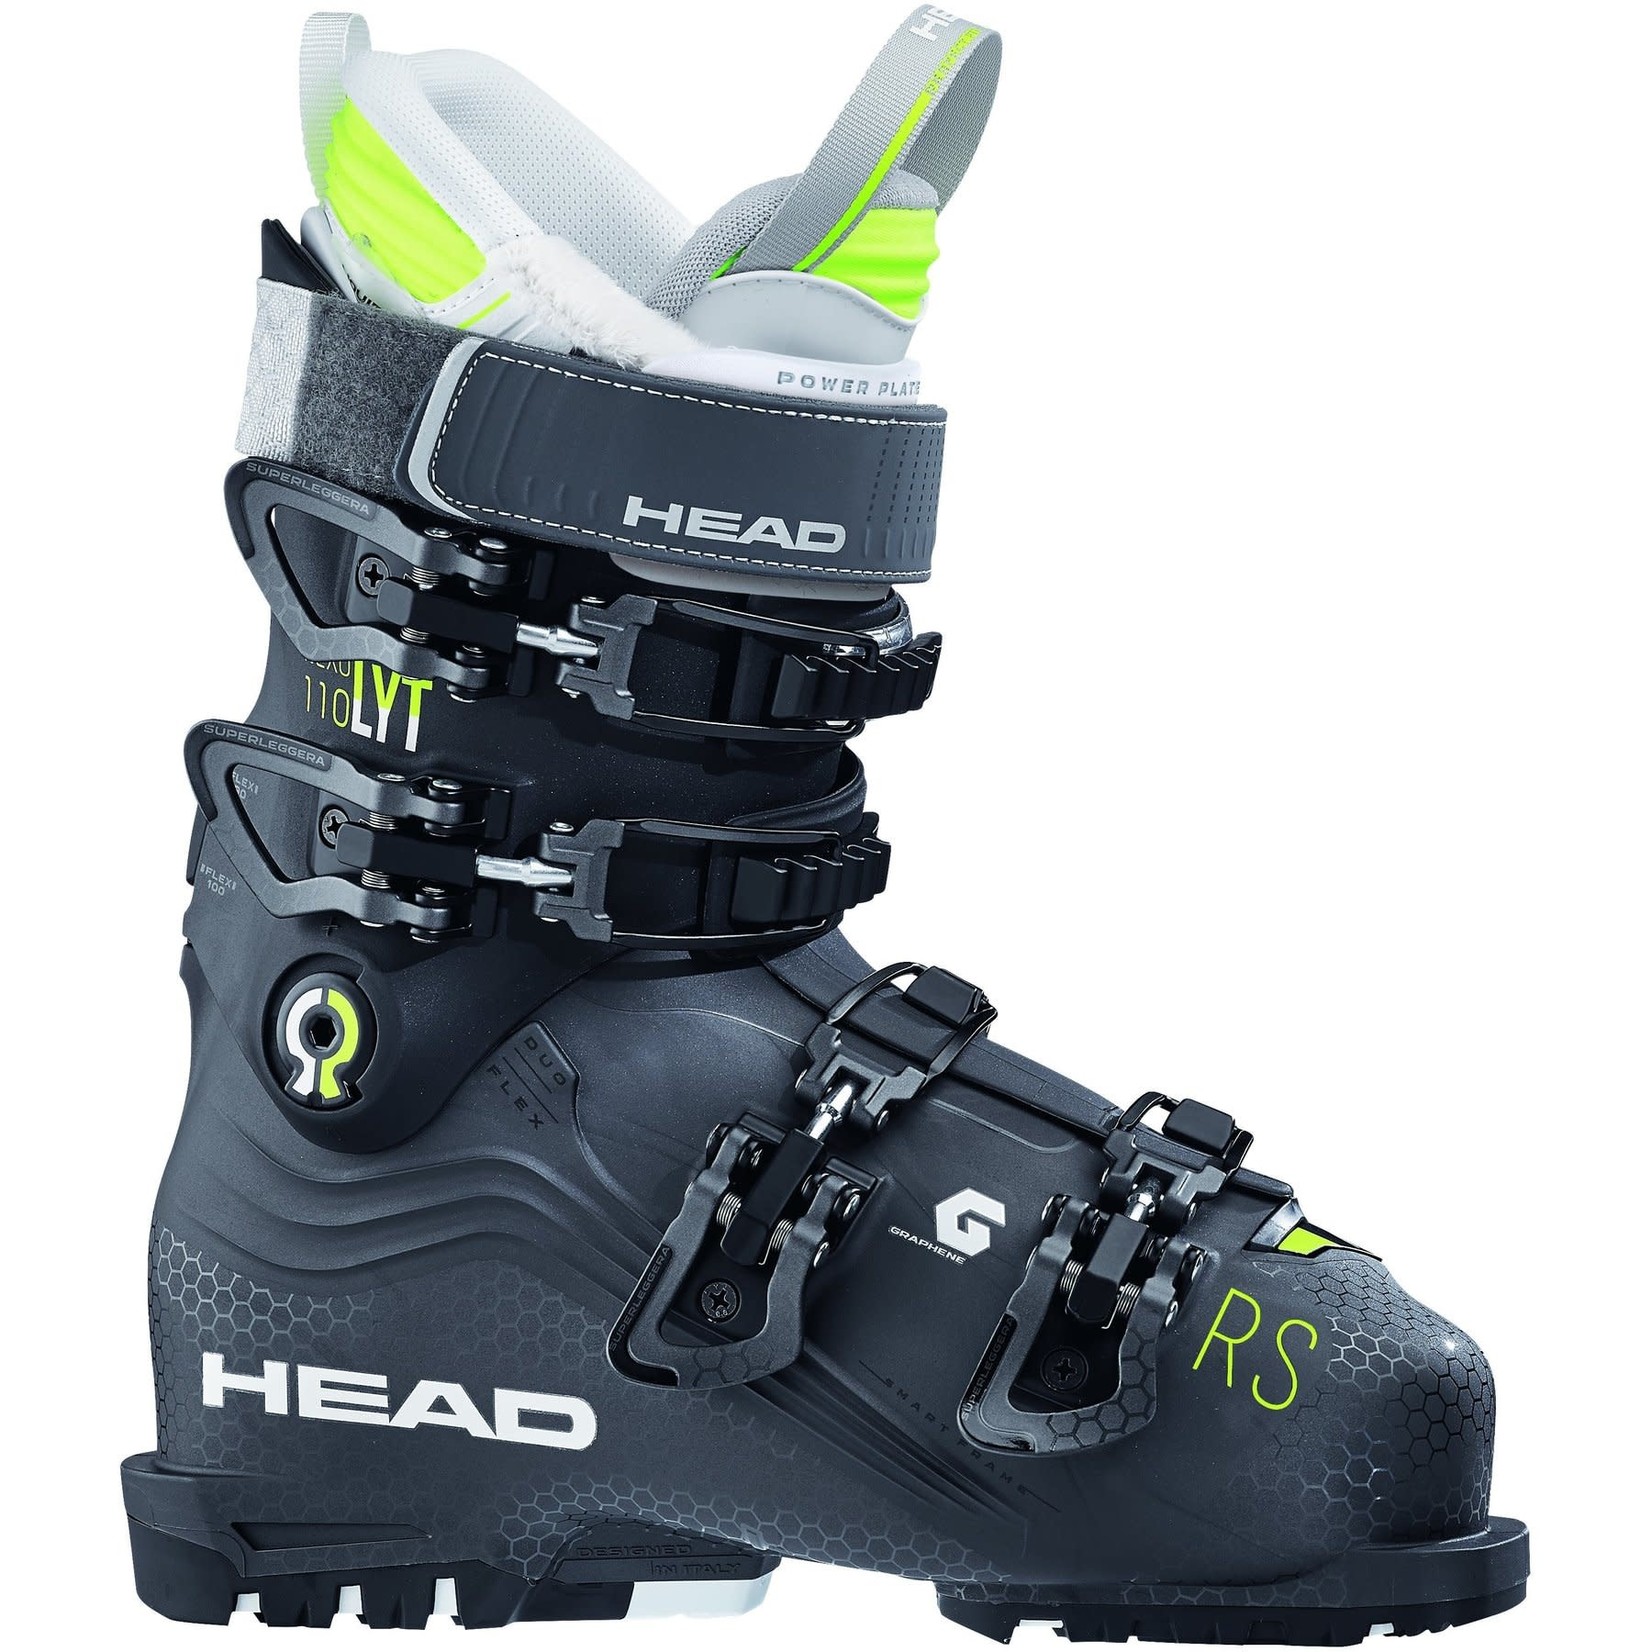 HEAD HEAD NEXO LYT MV 110 RS WOMEN'S SKI BOOTS